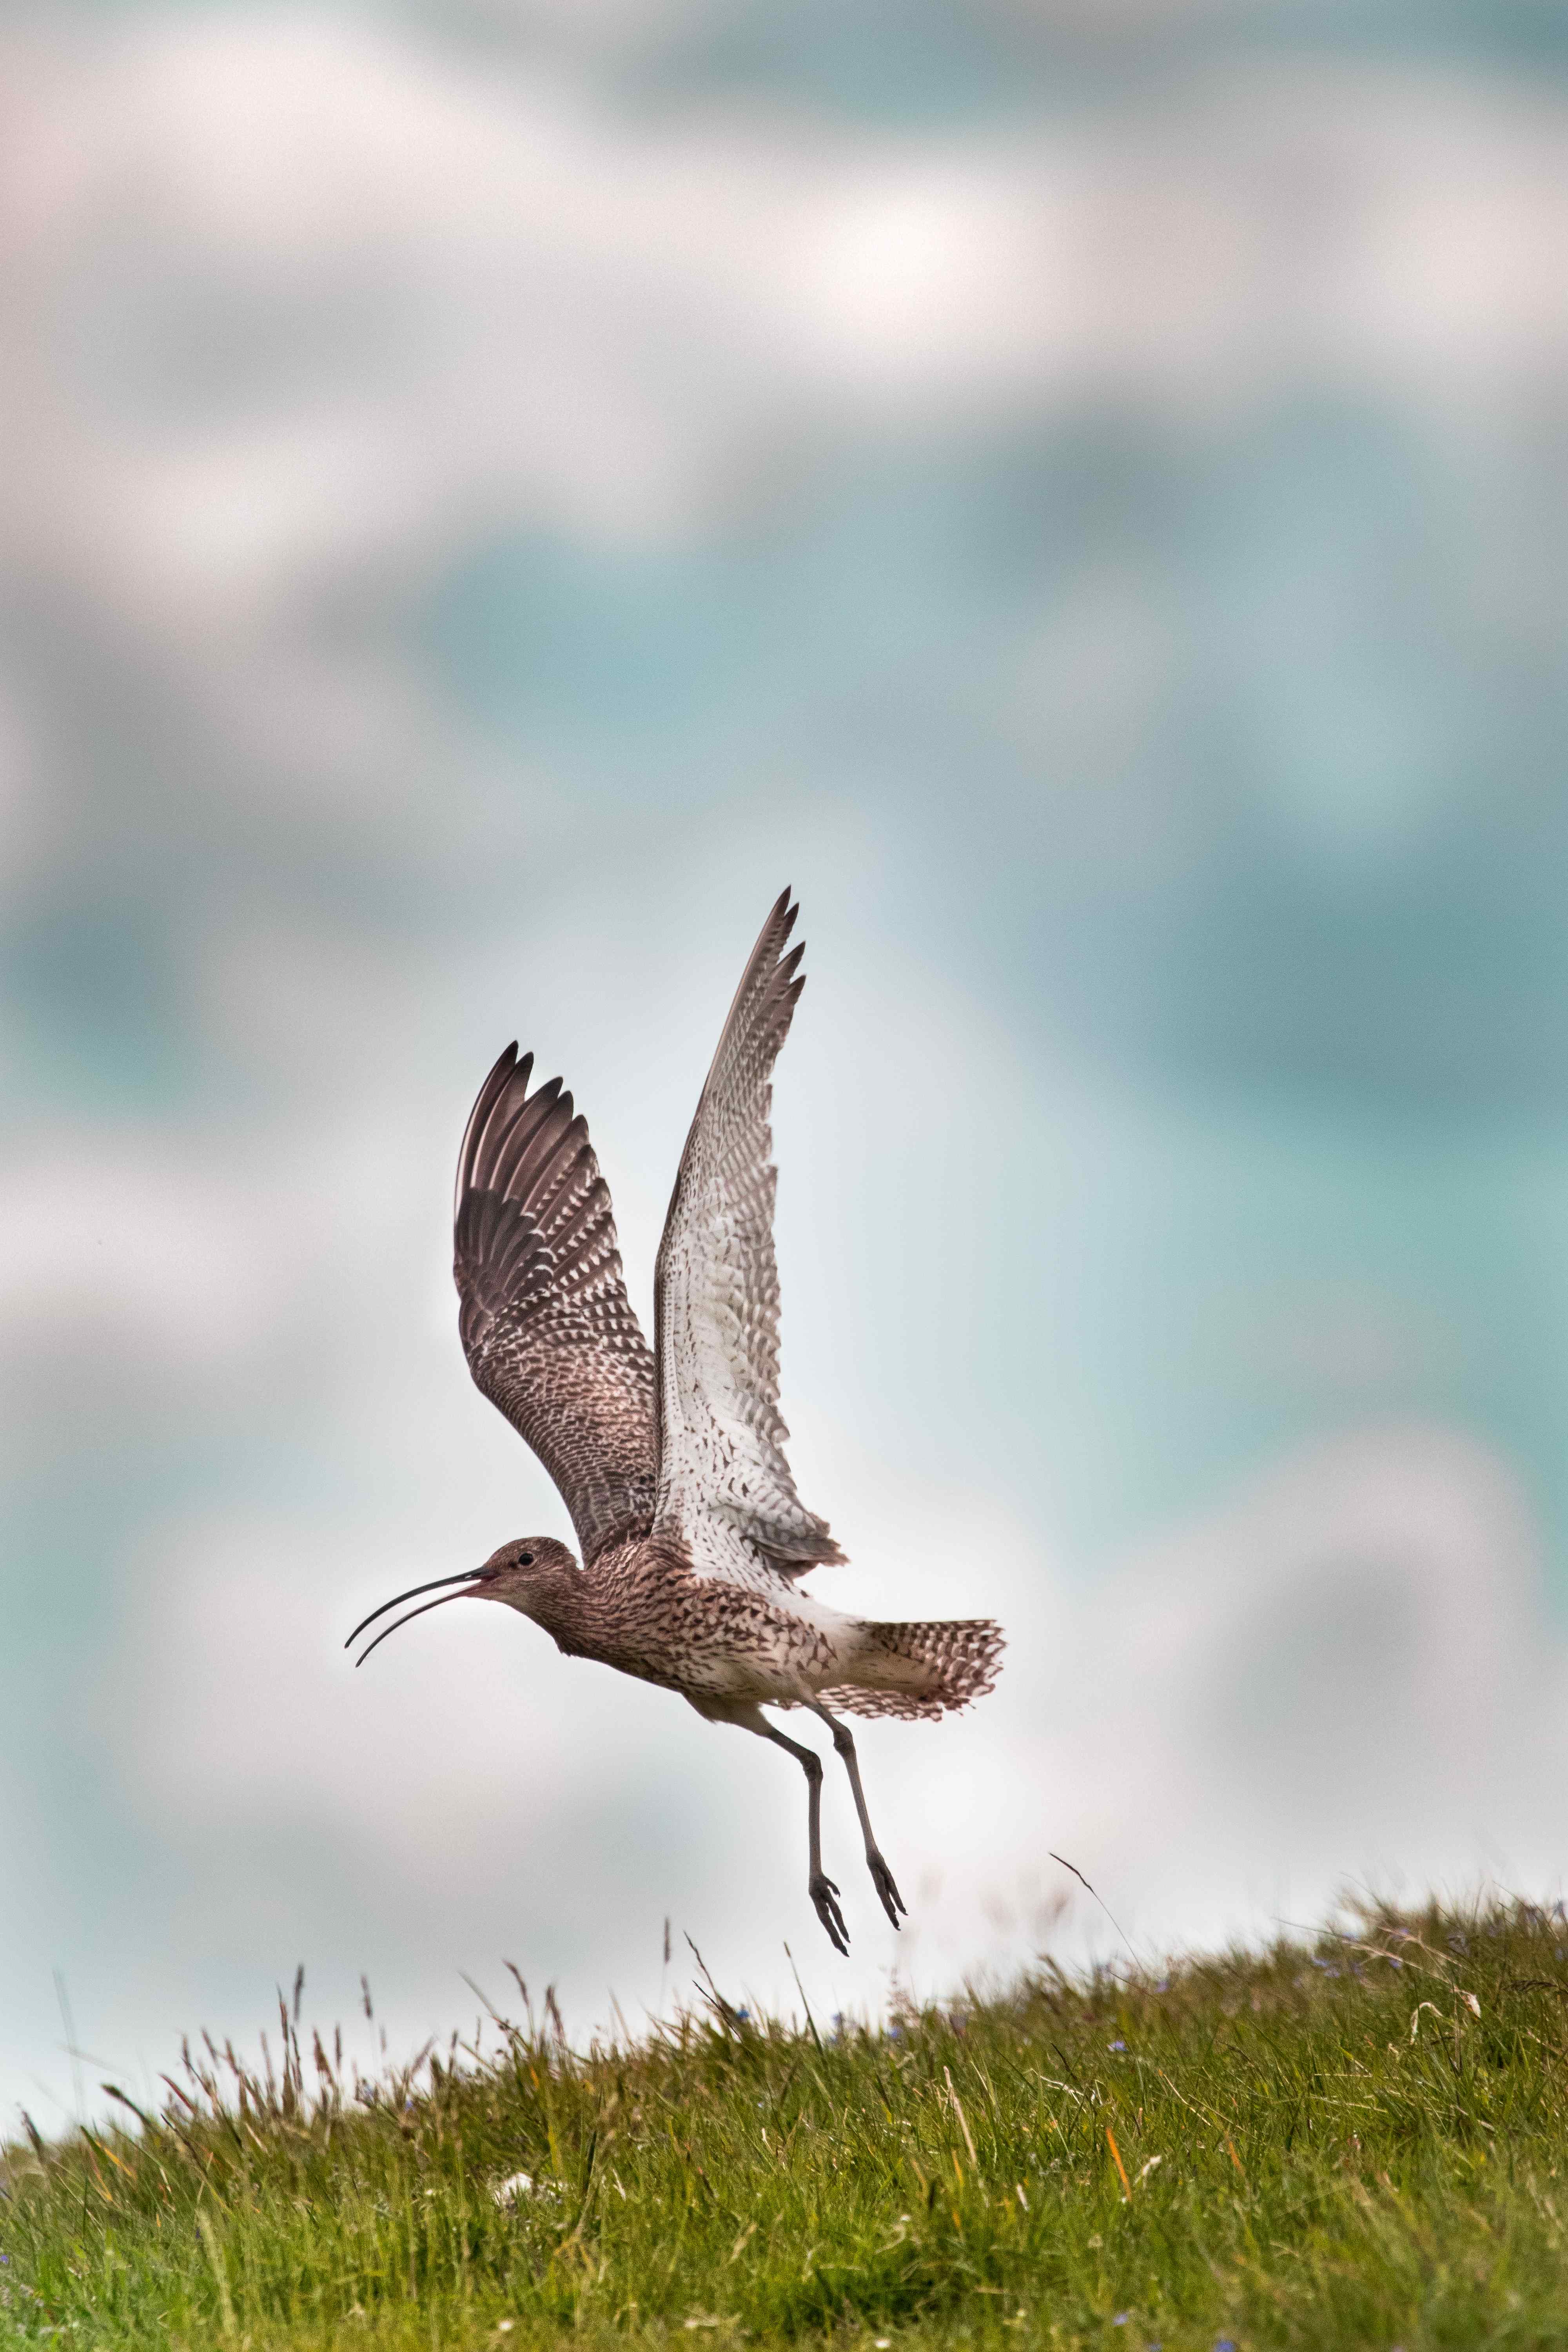 Curlew taking flight from a field.